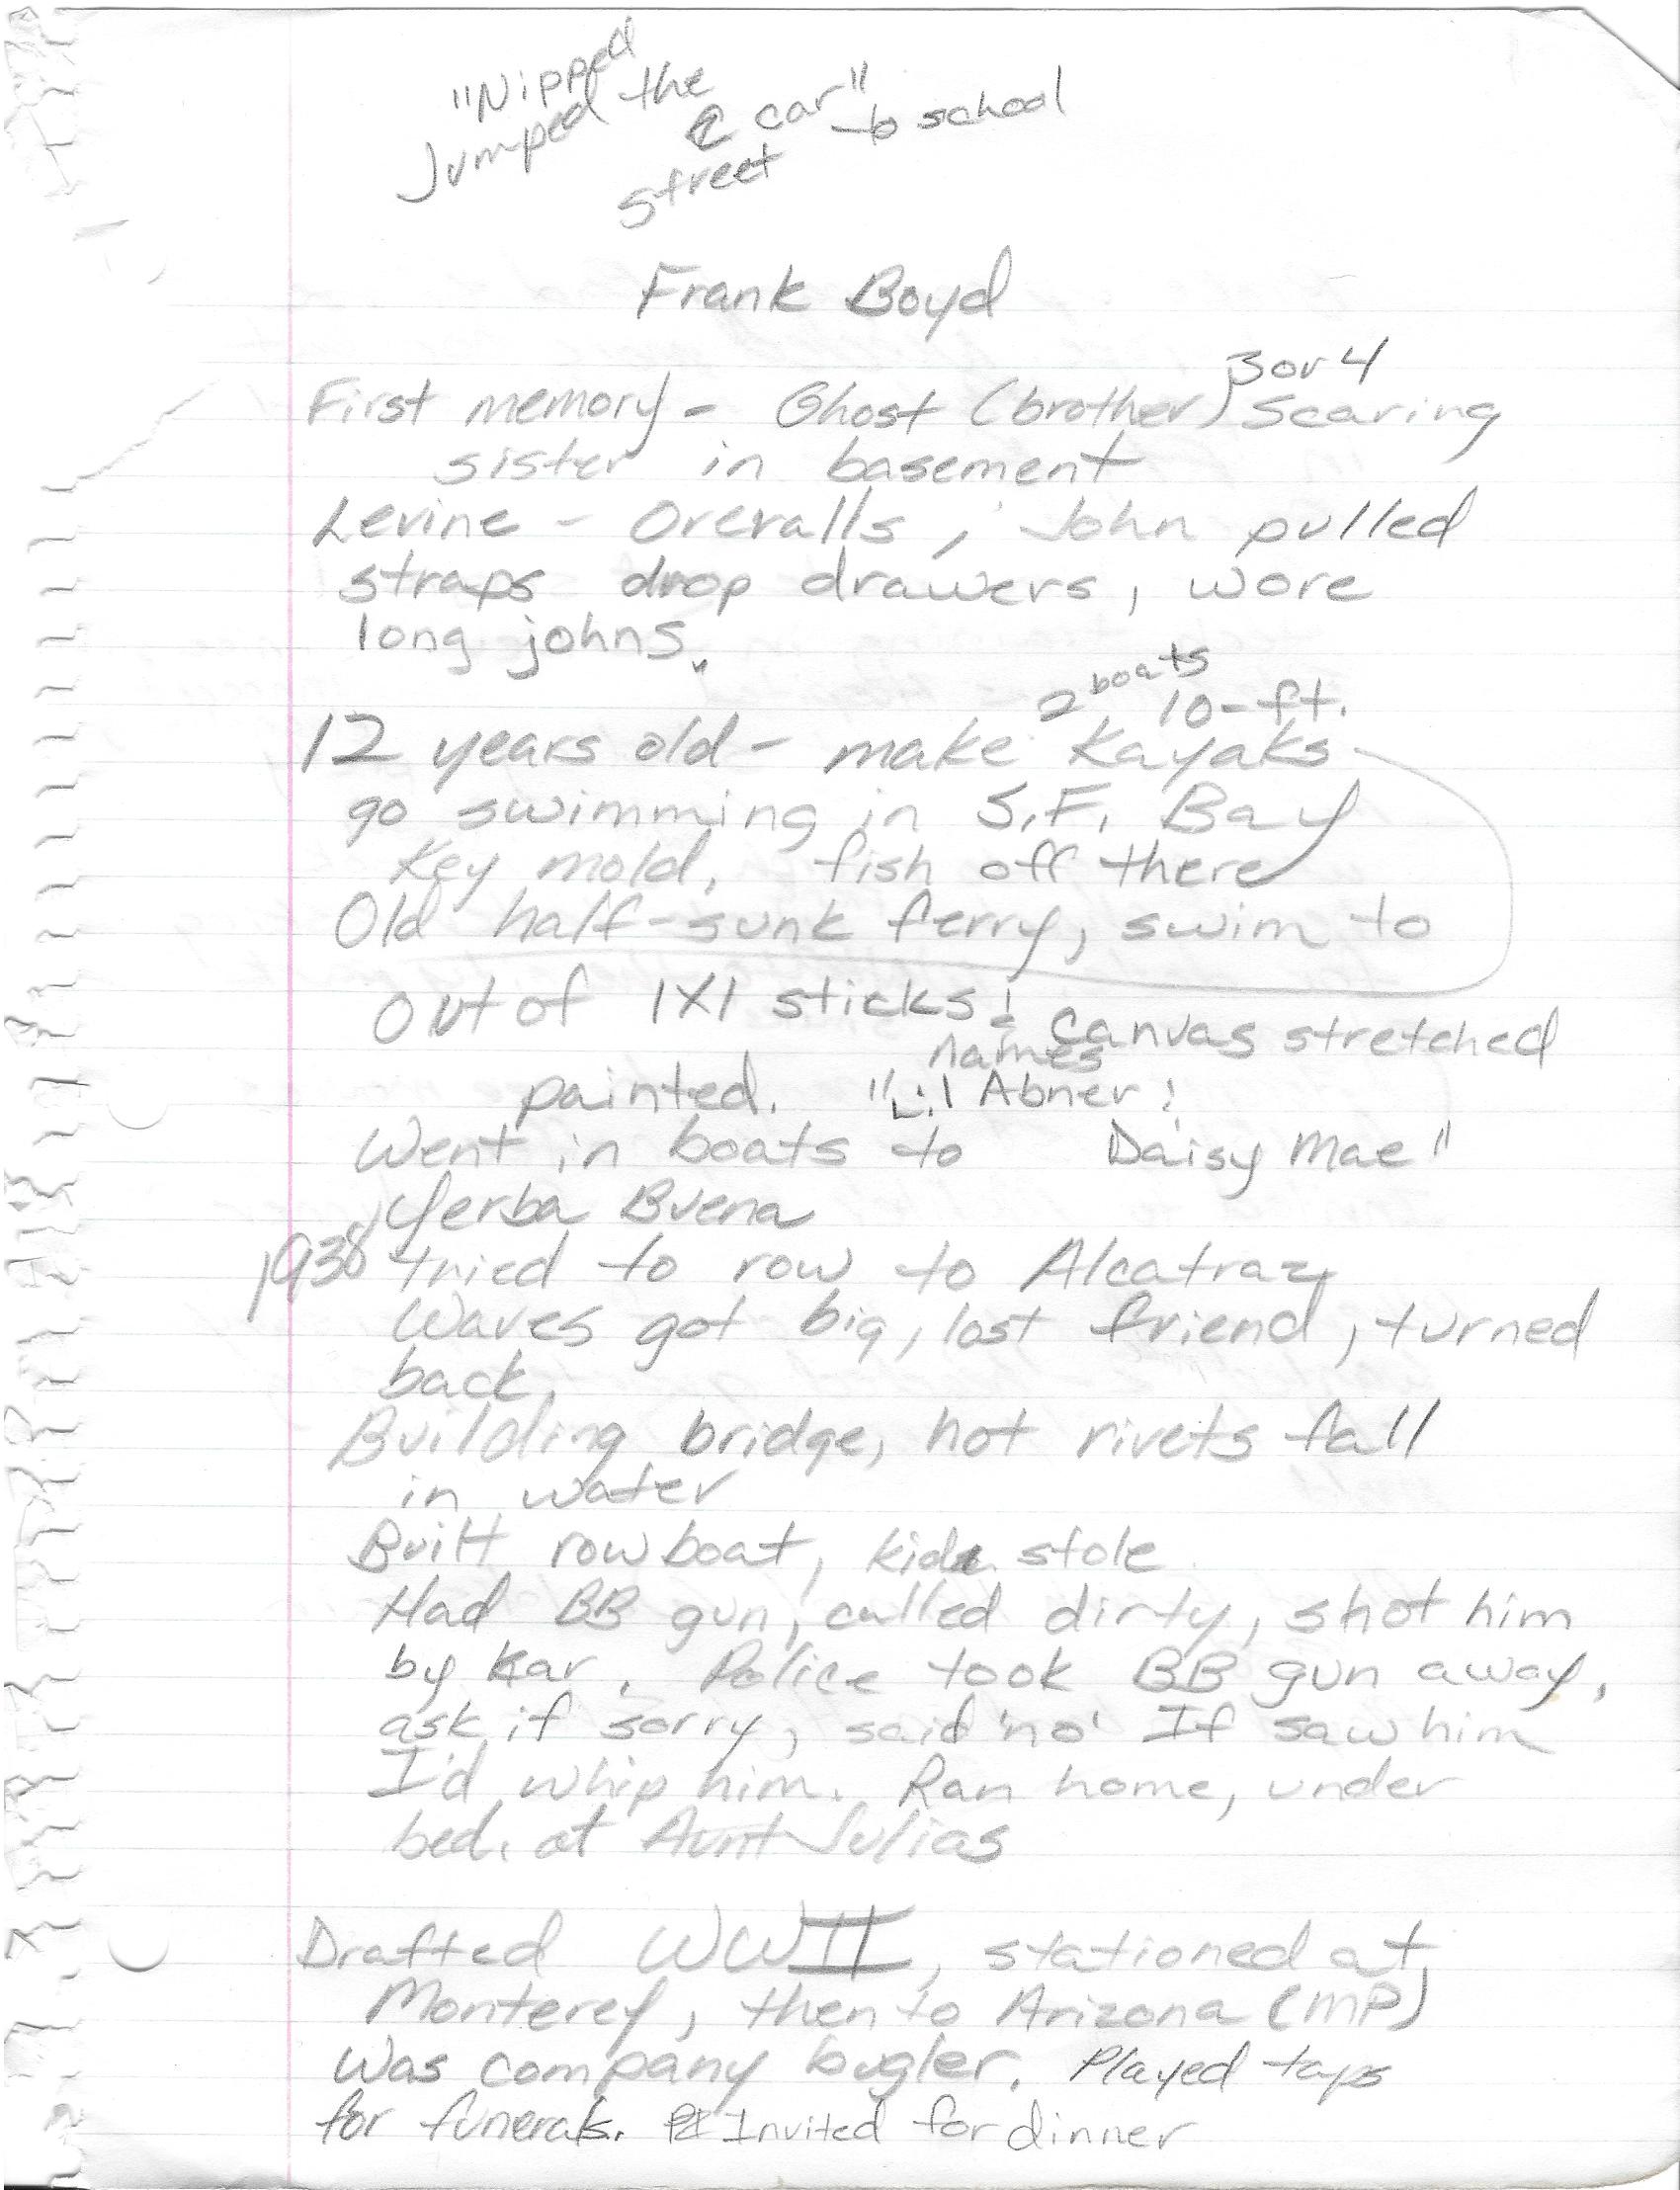 Handwritten notes about Frank Boyd